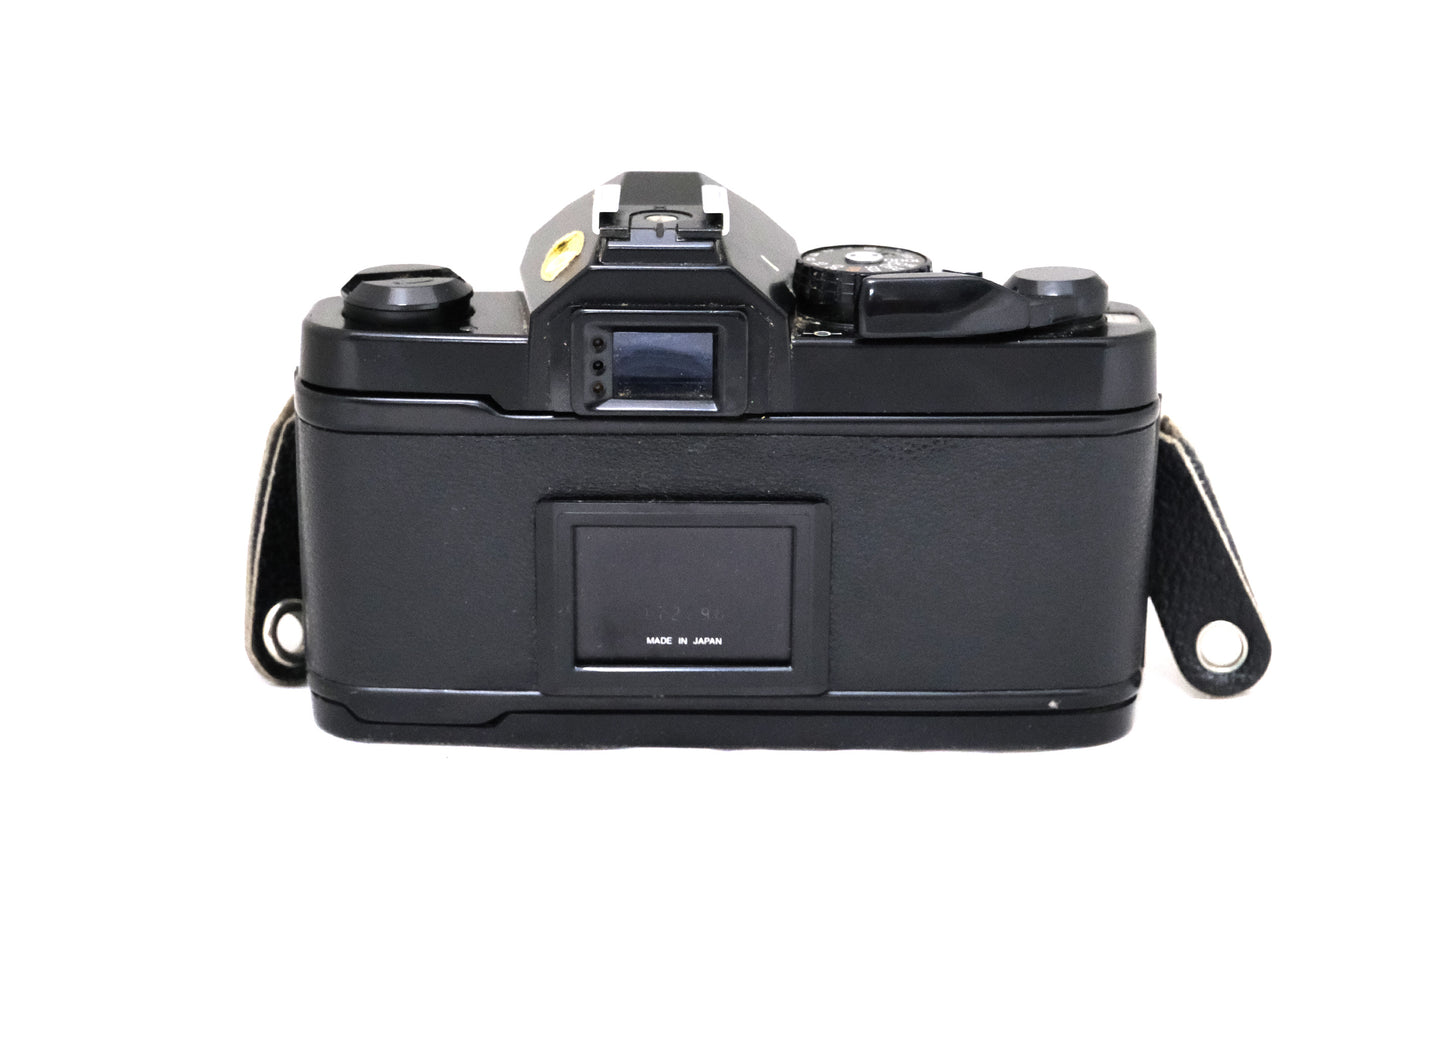 Chinon CM-4 + Chinon 50mm F/1,7 Auto + Väska & kamerarem